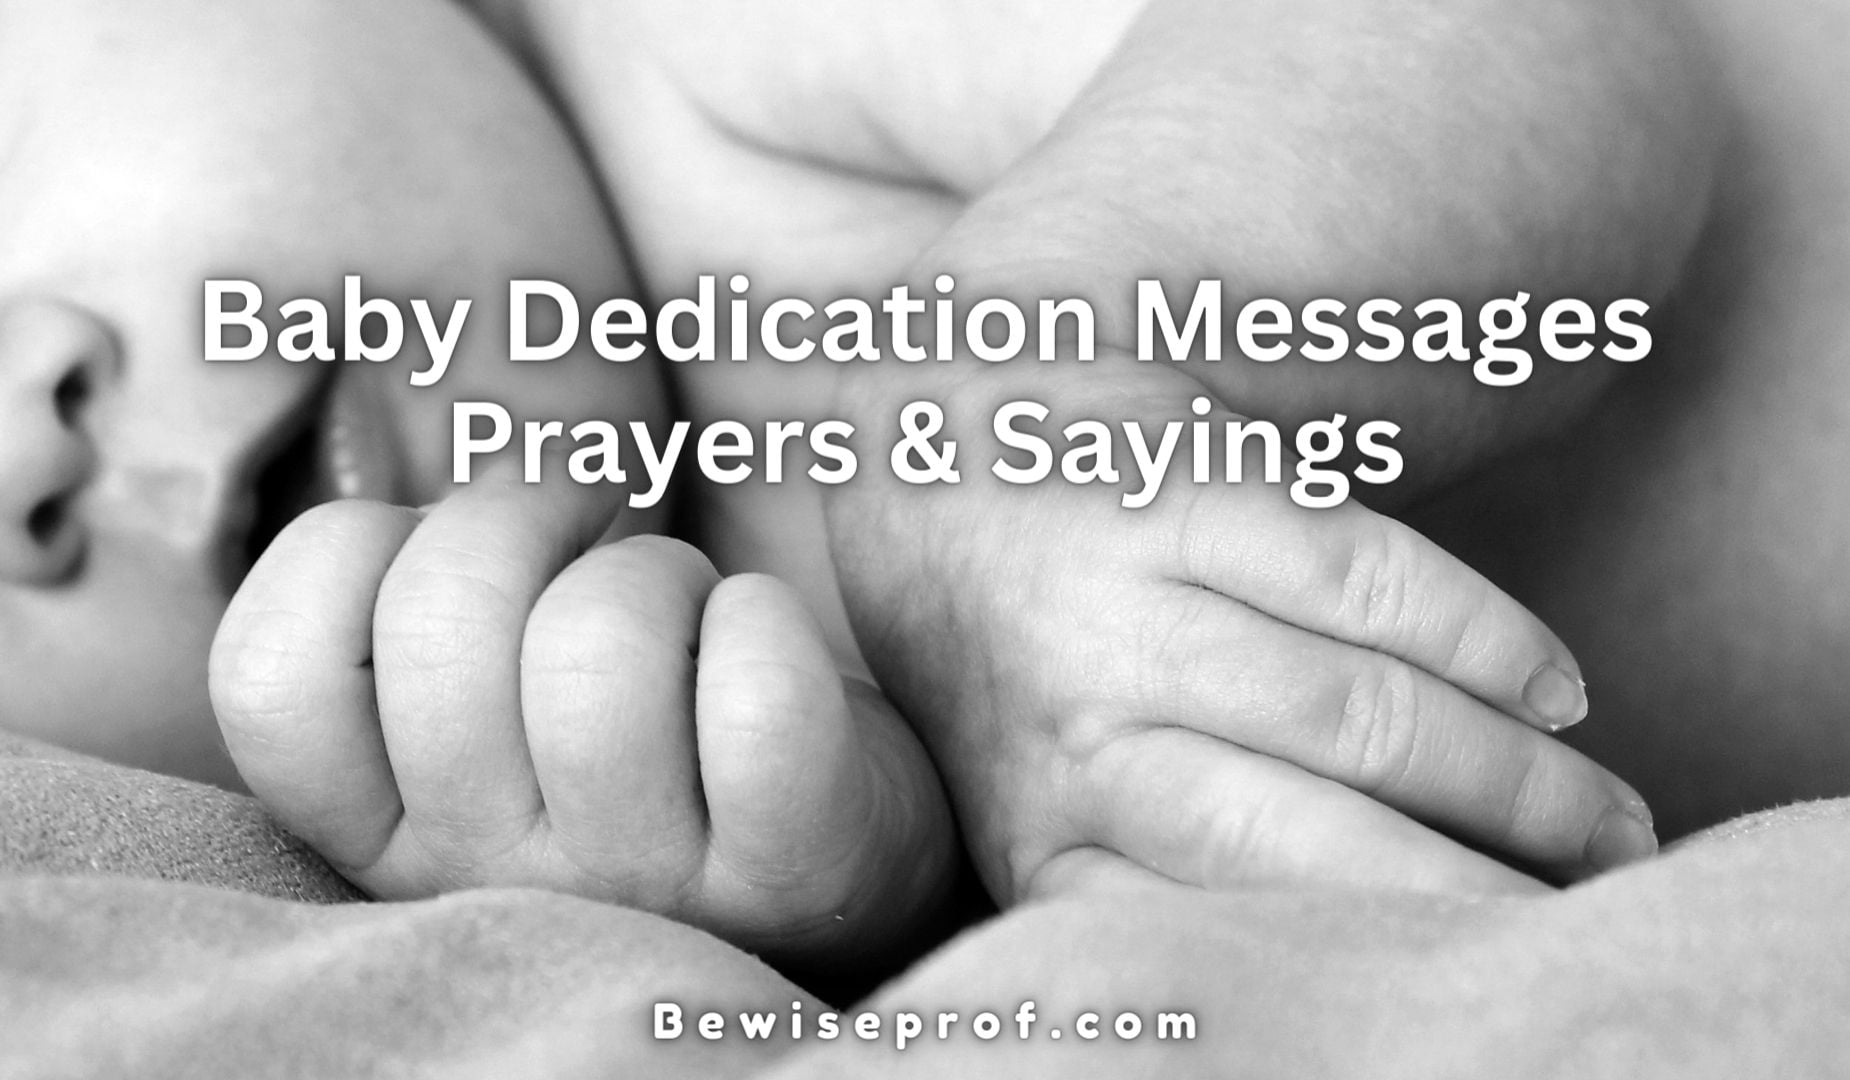 Baby Dedication Message(s), Prayers & Sayings